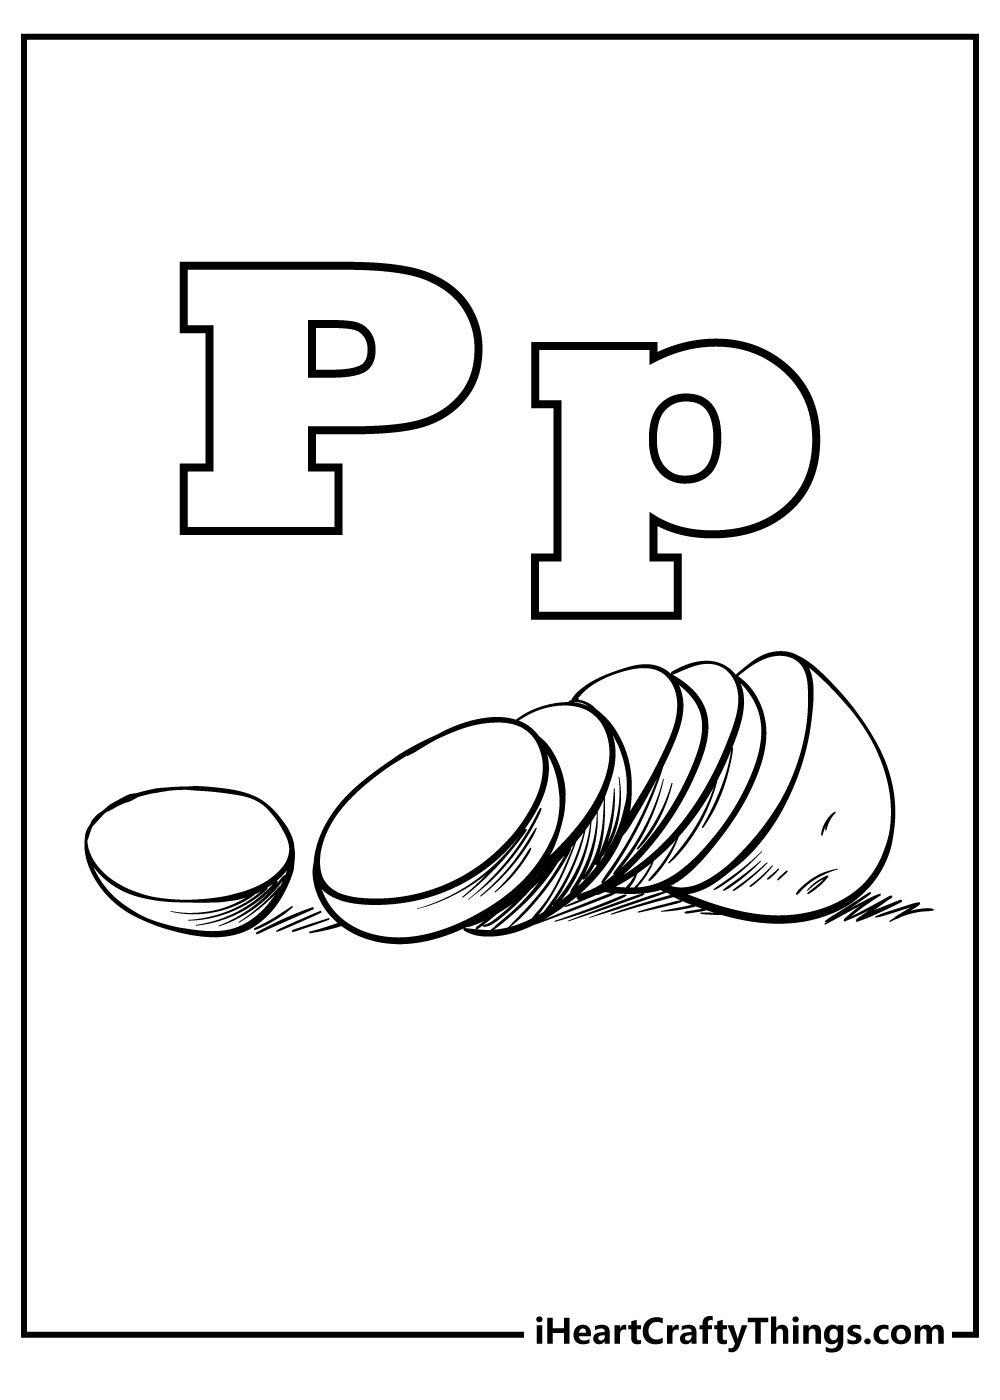 Letter P Coloring Original Sheet for children free download